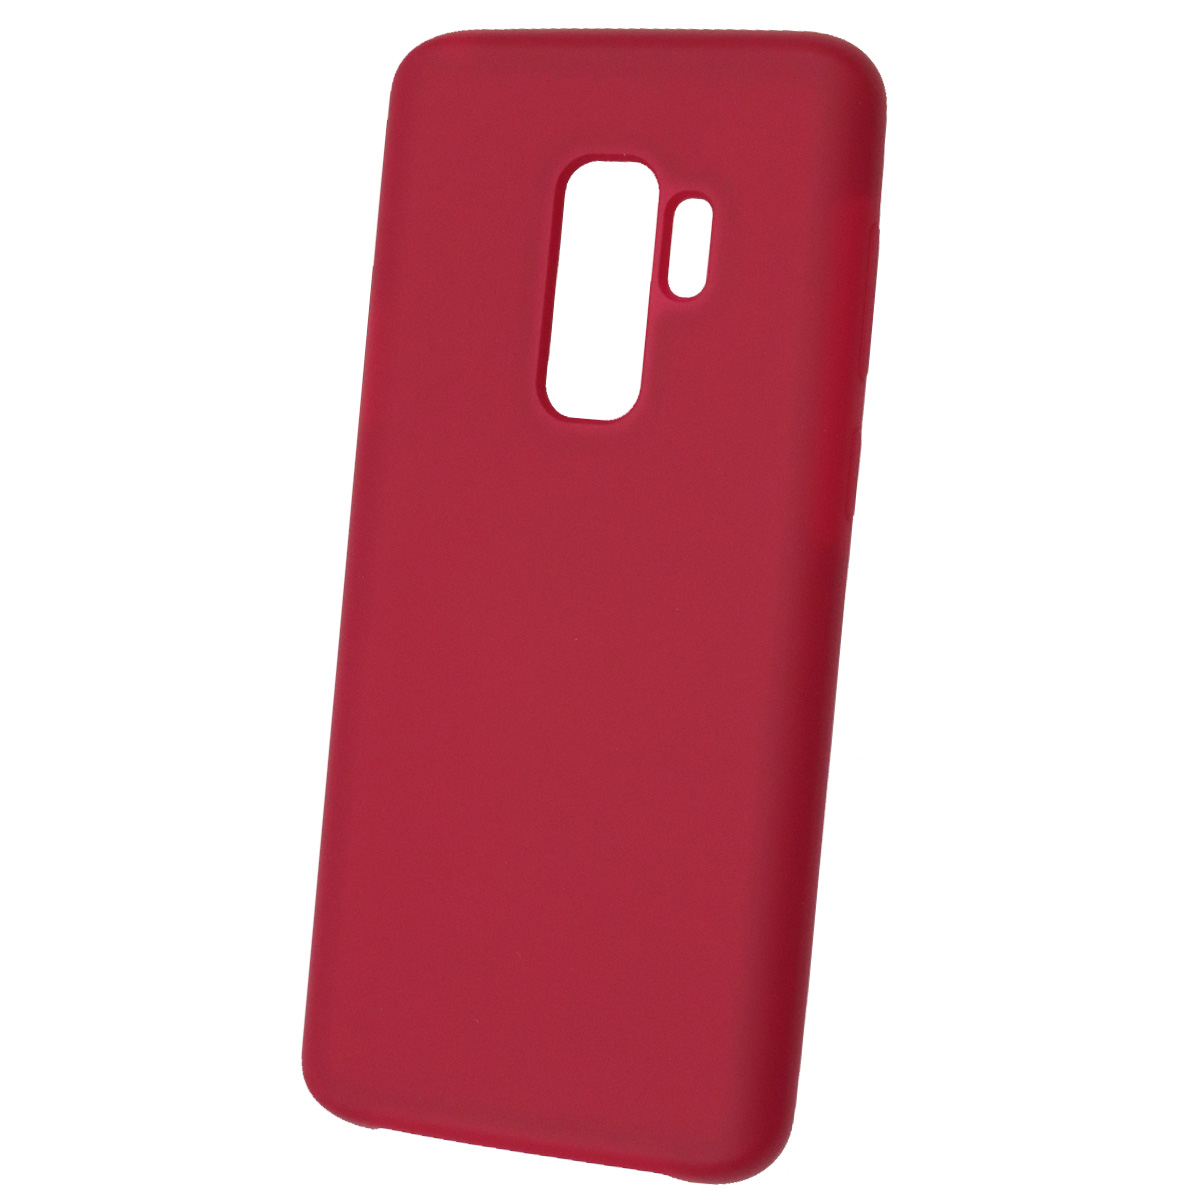 Чехол накладка Silicon Cover для SAMSUNG Galaxy S9 Plus (SM-G965), силикон, бархат, цвет бордовый.